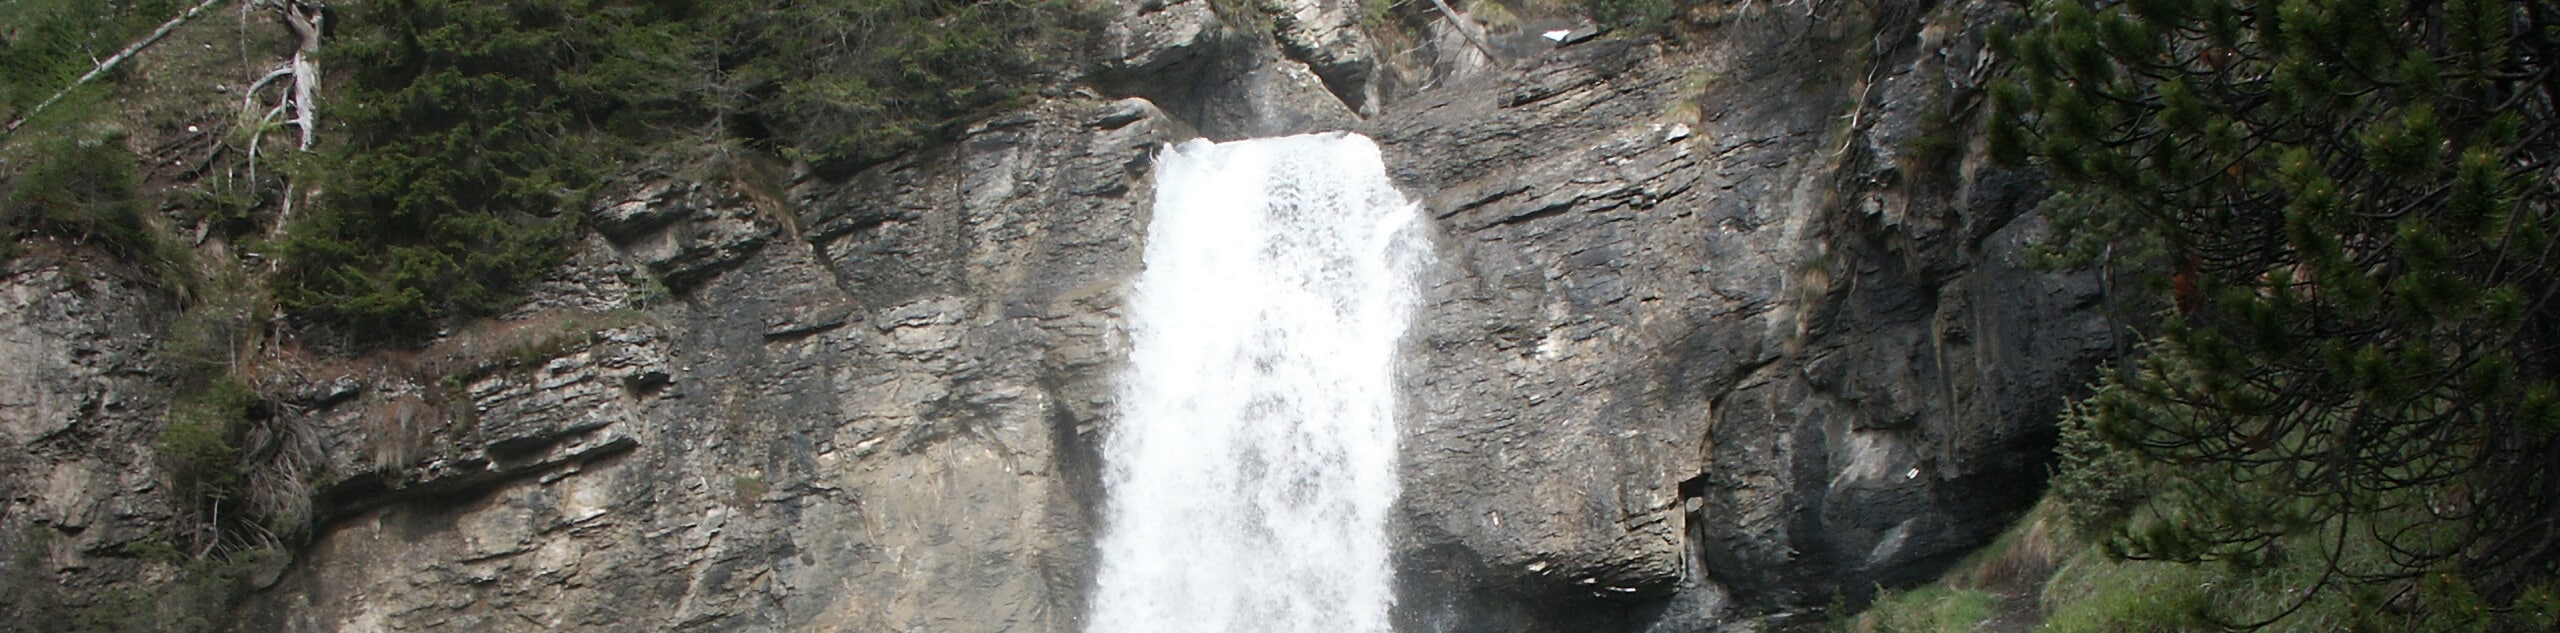 Behind the Waterfall Hike